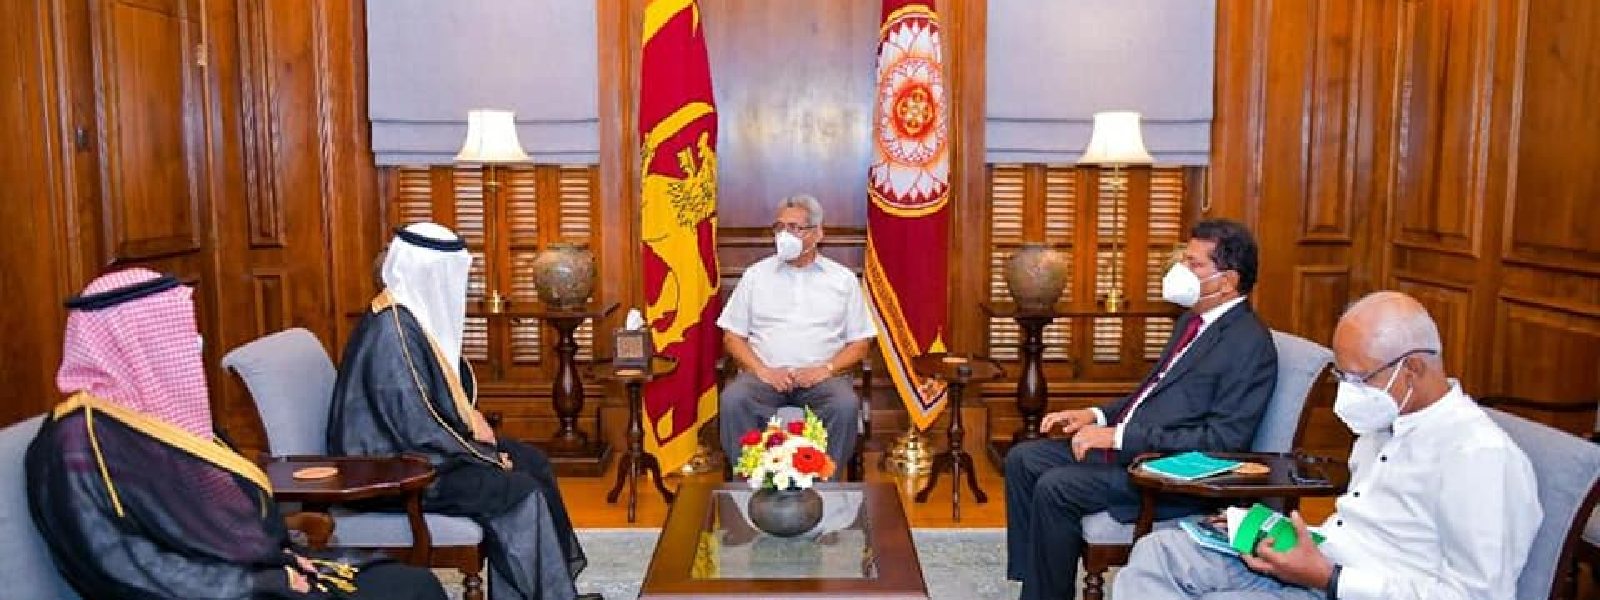 Saudi Fund for Development to continue assistance to Sri Lanka